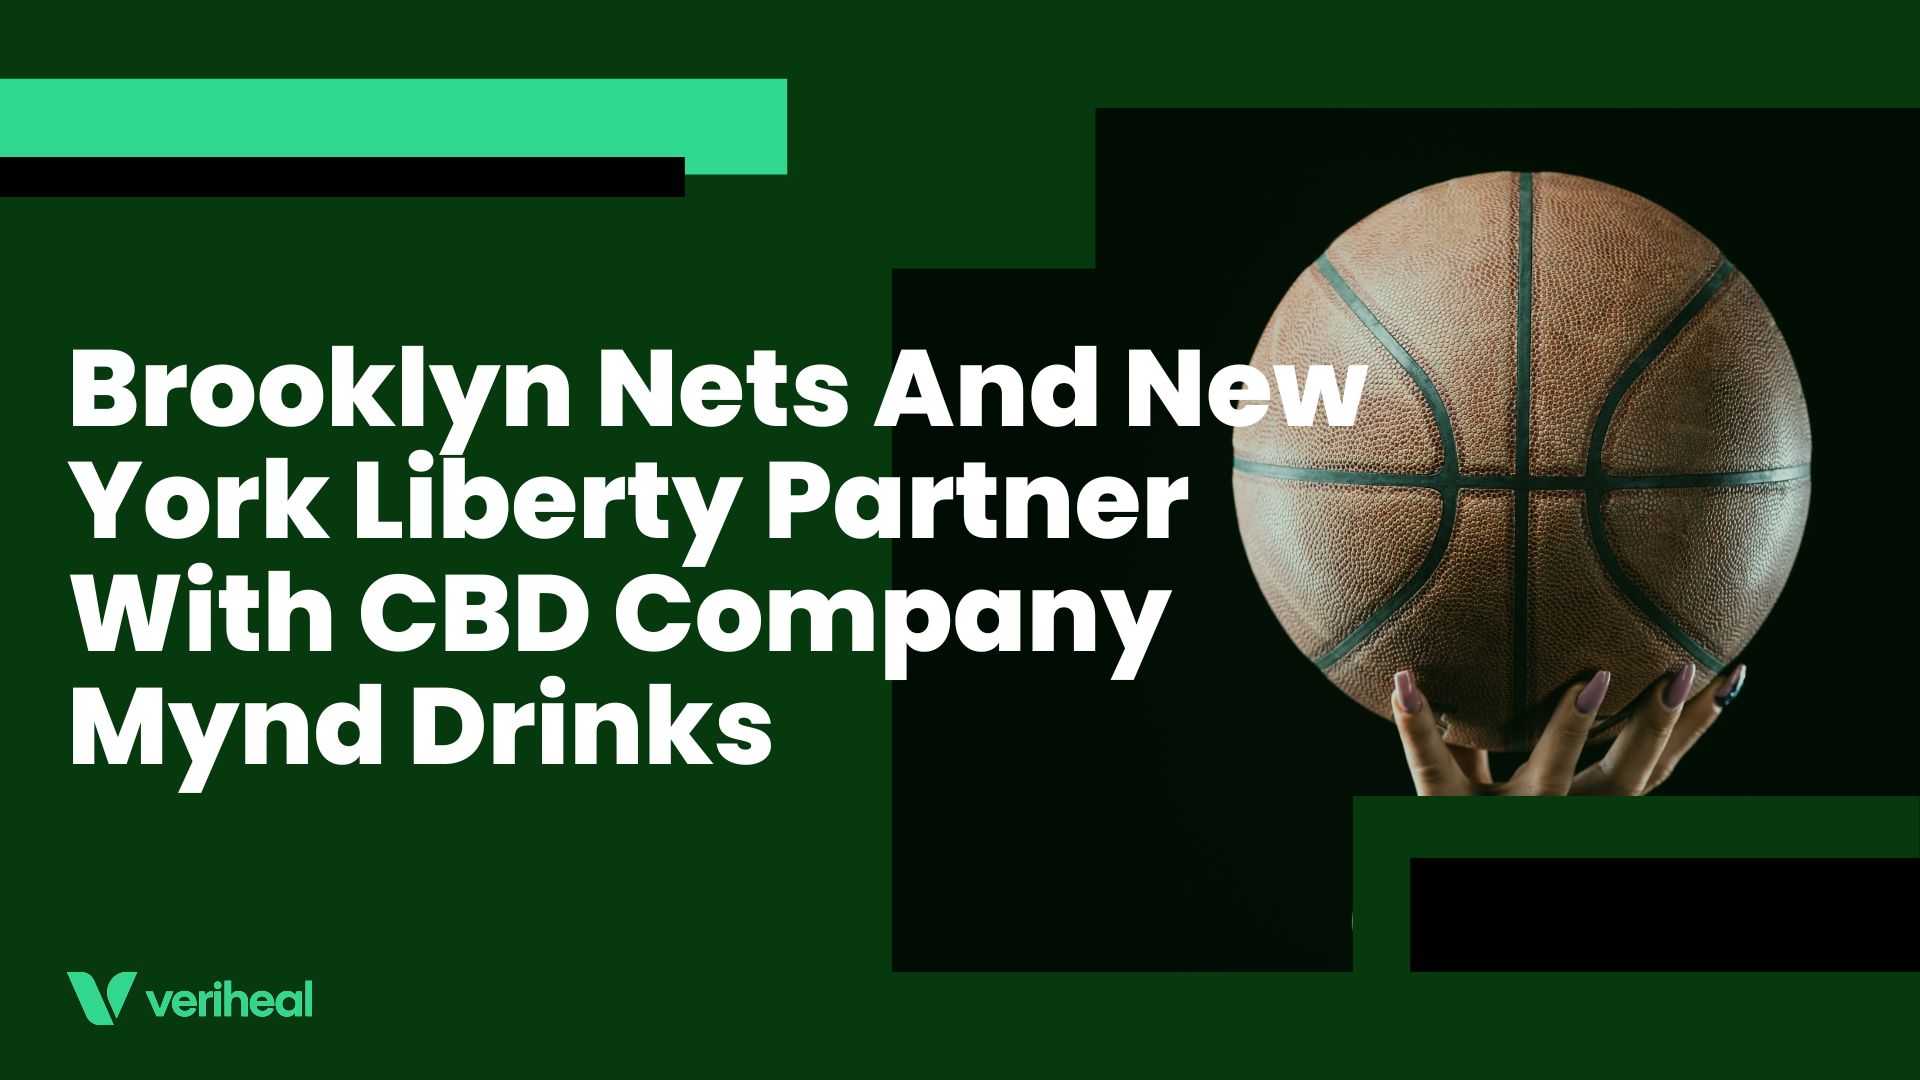 Brooklyn Nets And New York Liberty Partner With CBD Company Mynd Drinks